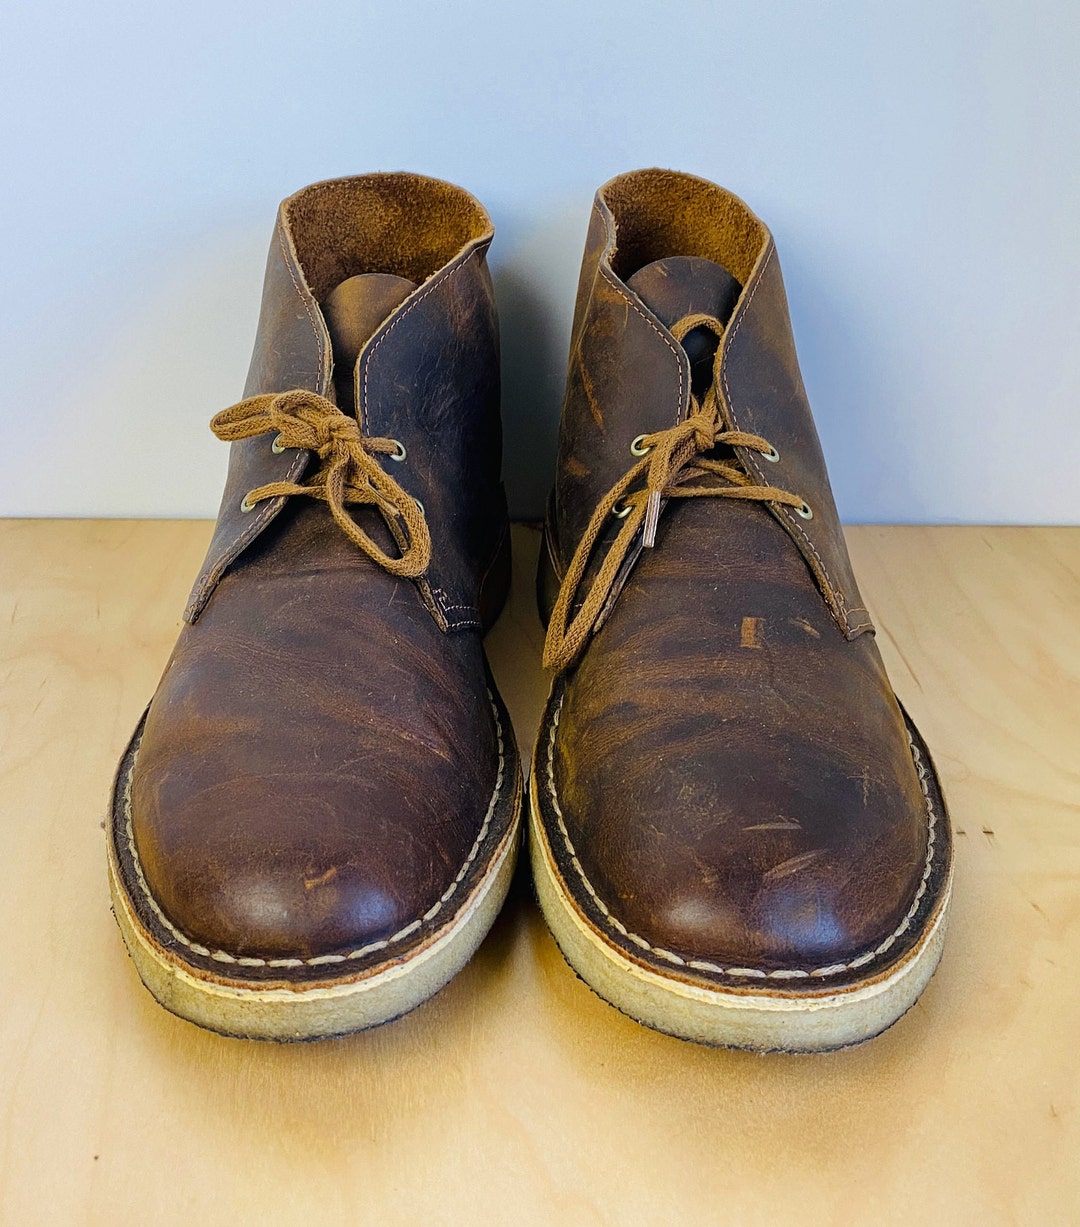 Original Clarks Desert Boots, 11M. - Etsy